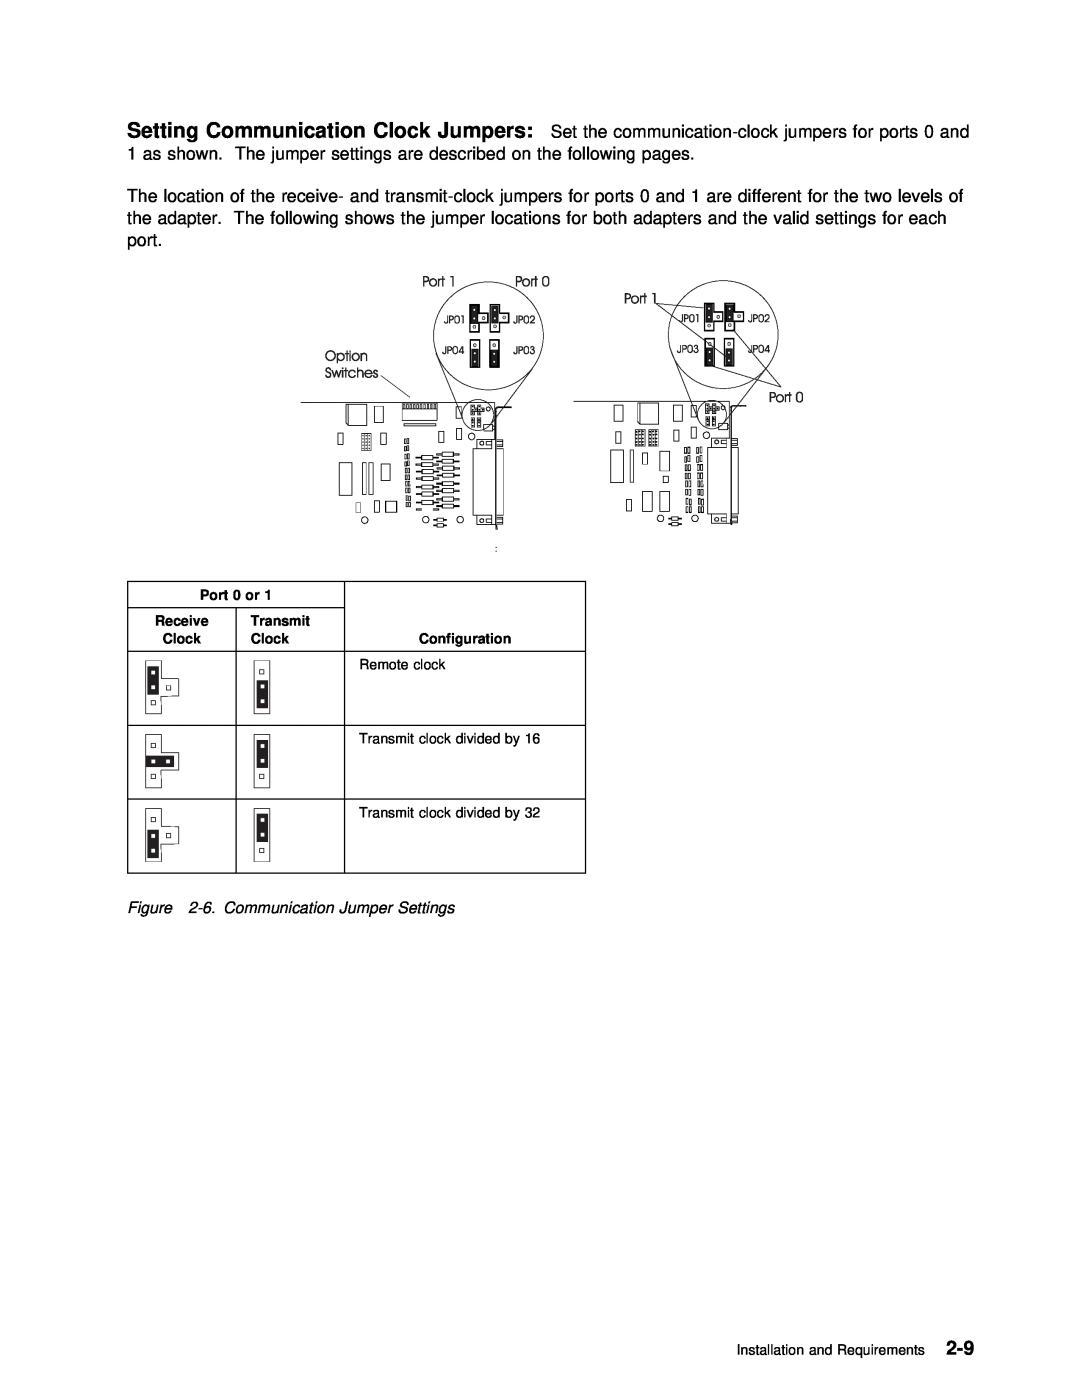 IBM ARTIC186 manual Clock Jumpers, 6. Communication Jumper Settings 